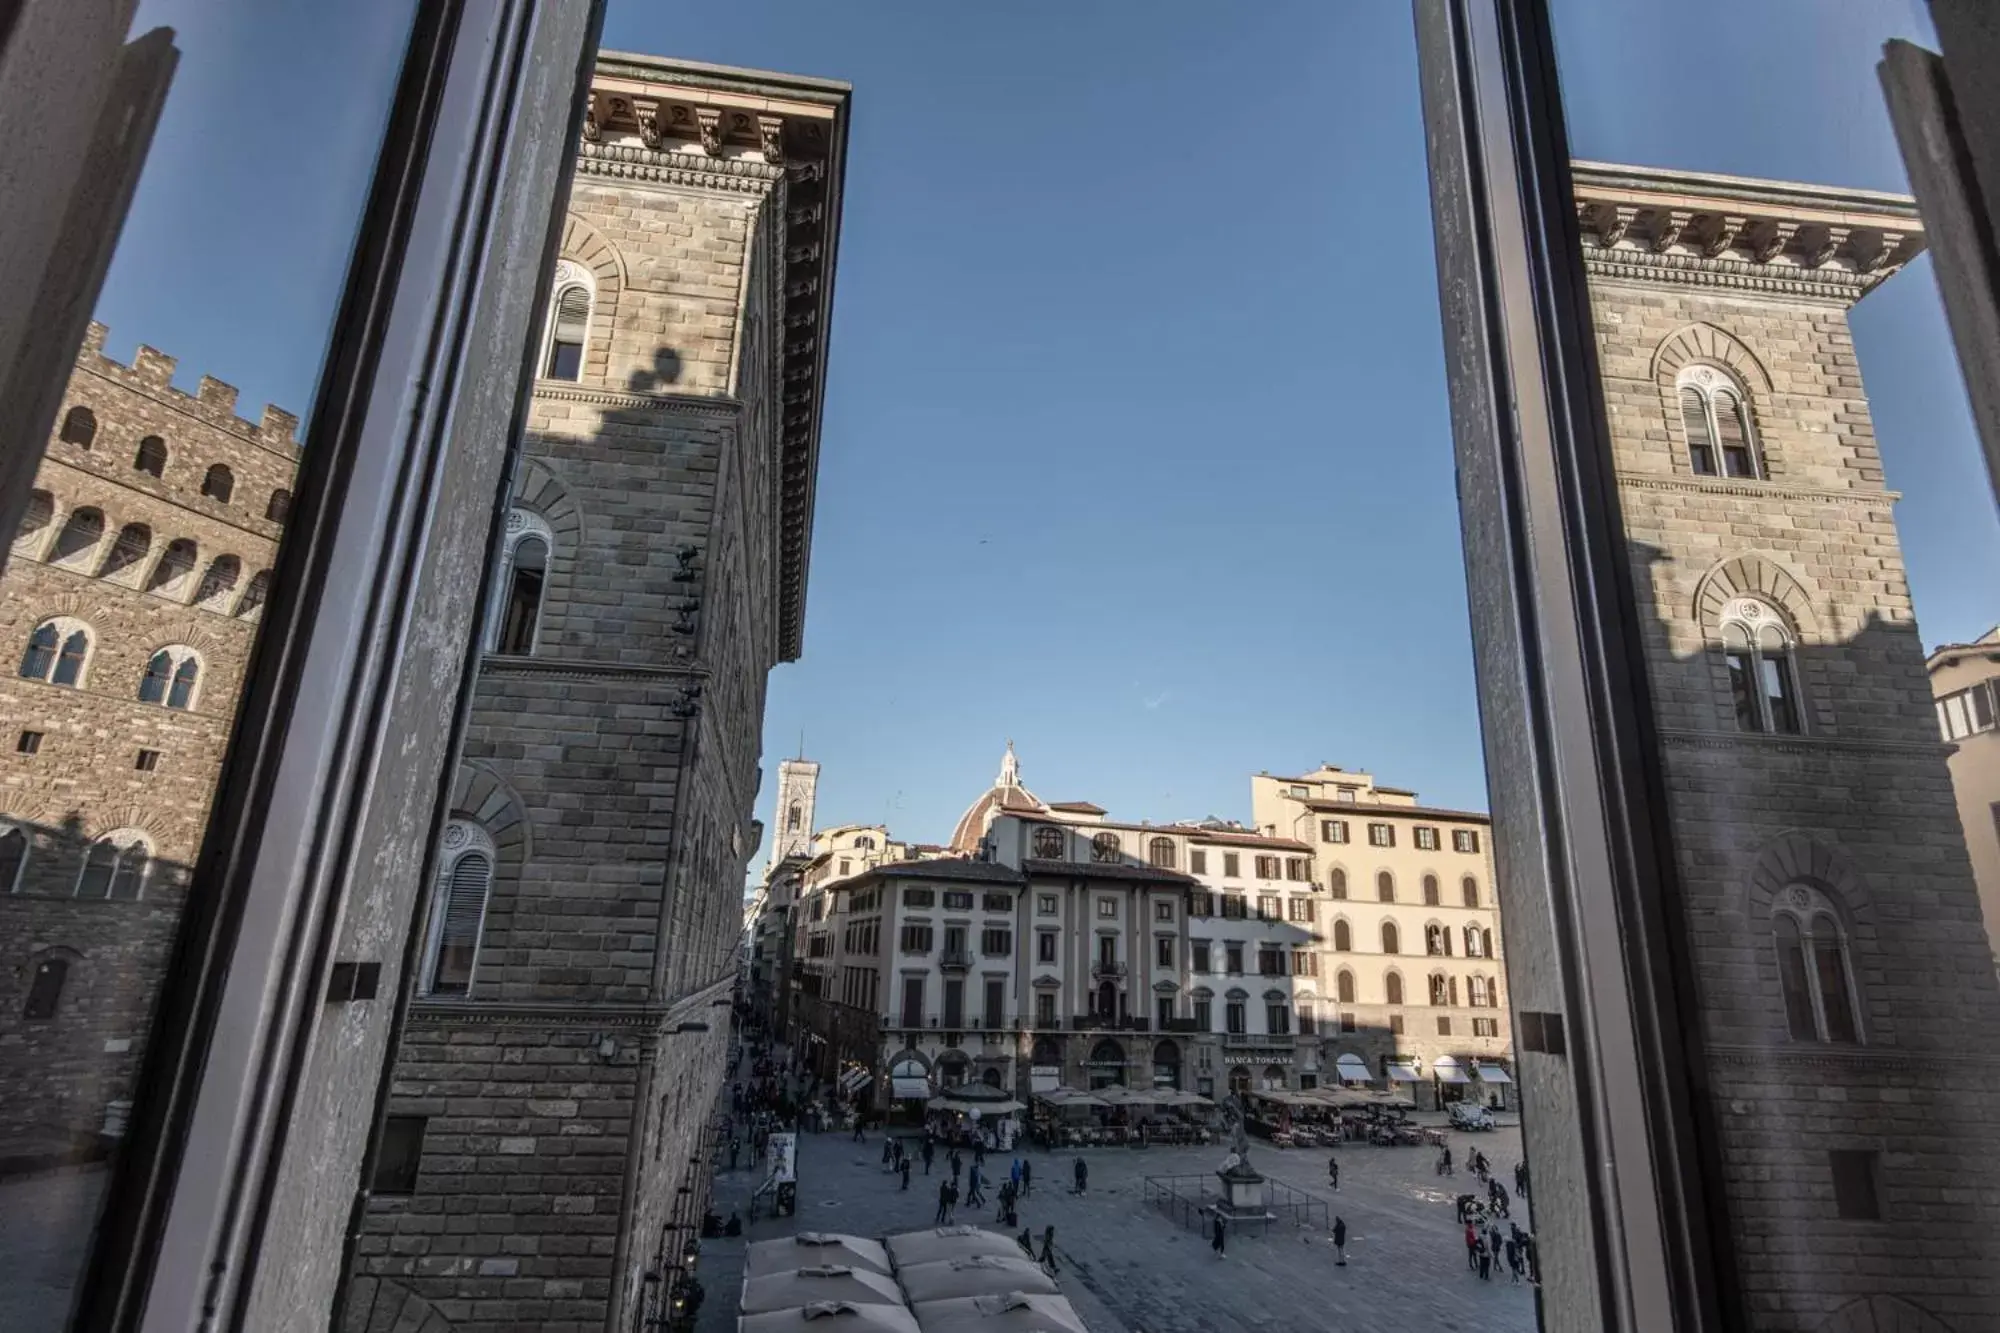 City view in Relais Uffizi